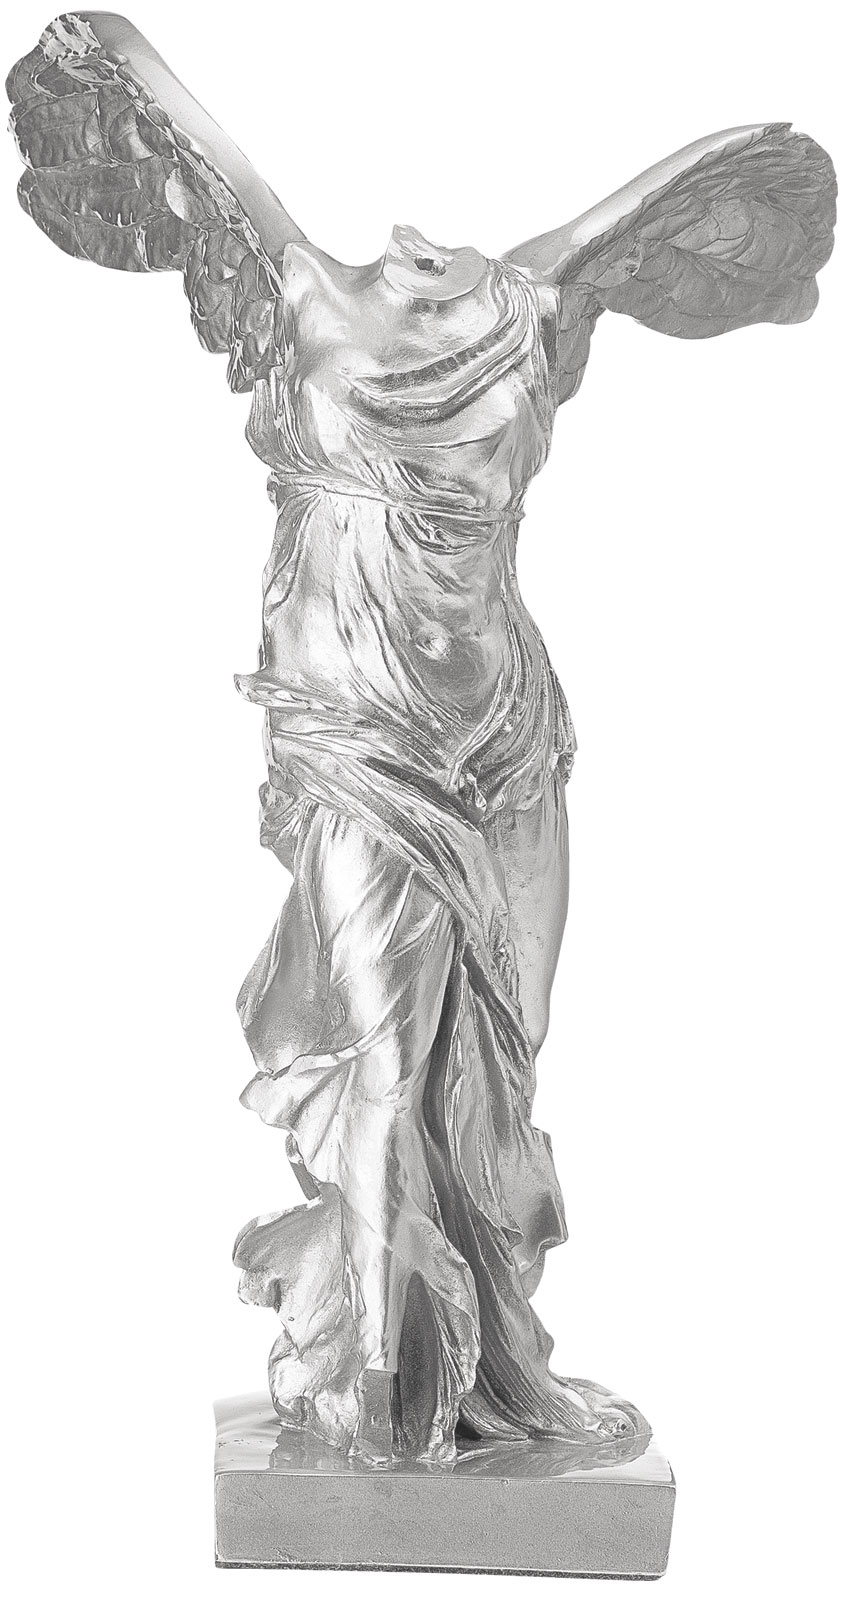 Skulptur 'Nike von Samothrake', Kunstguss silber